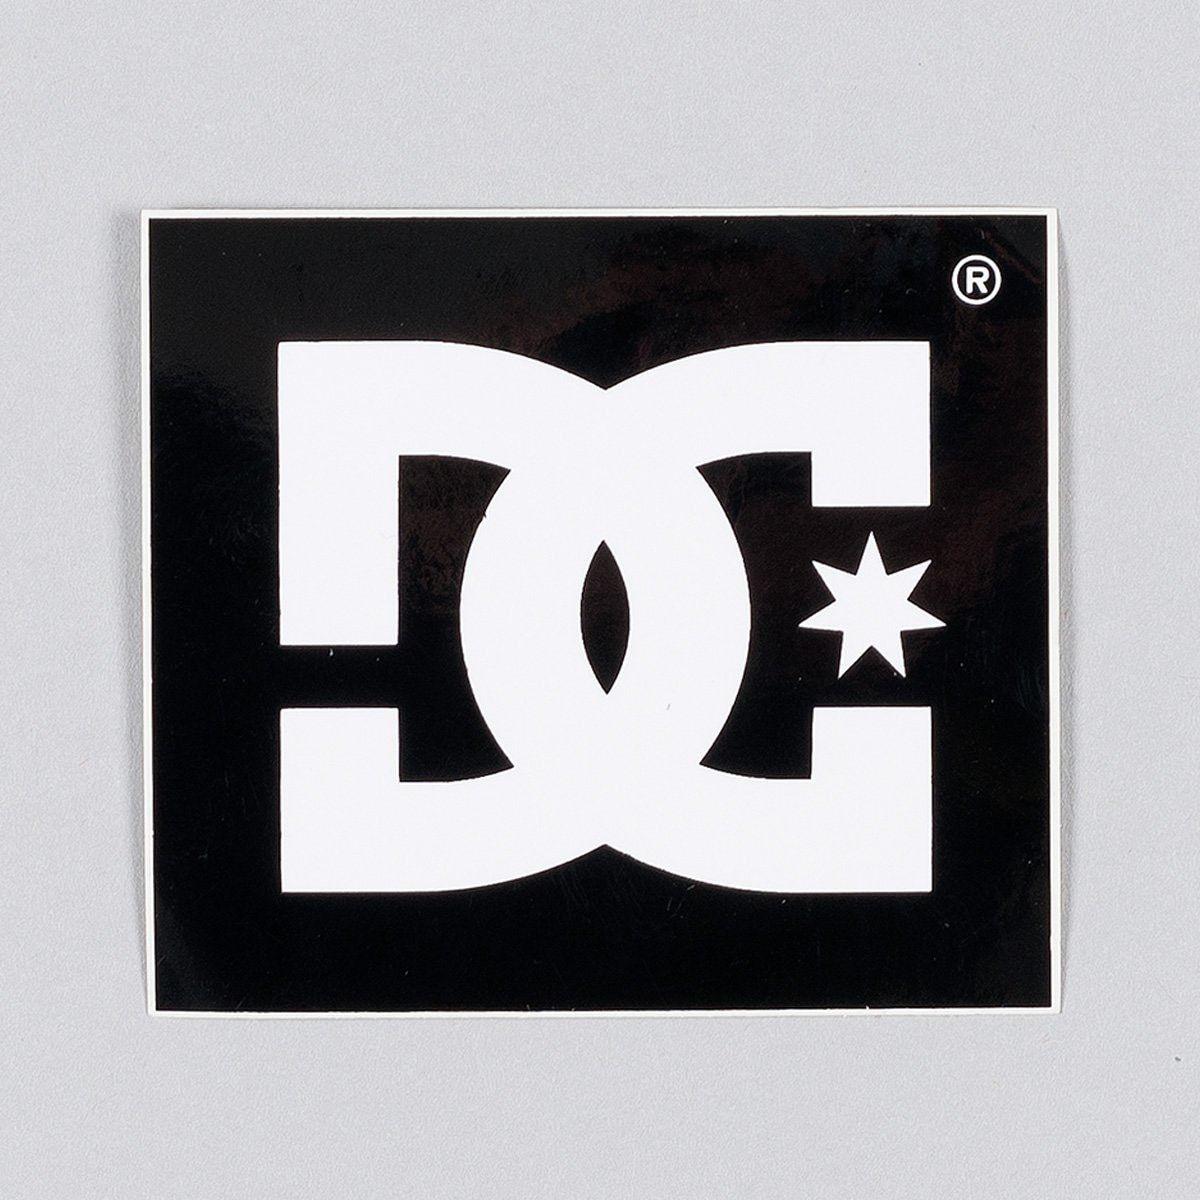 Black and White DC Logo - DC Star Logo Sticker 60mm x 55mm.co.uk